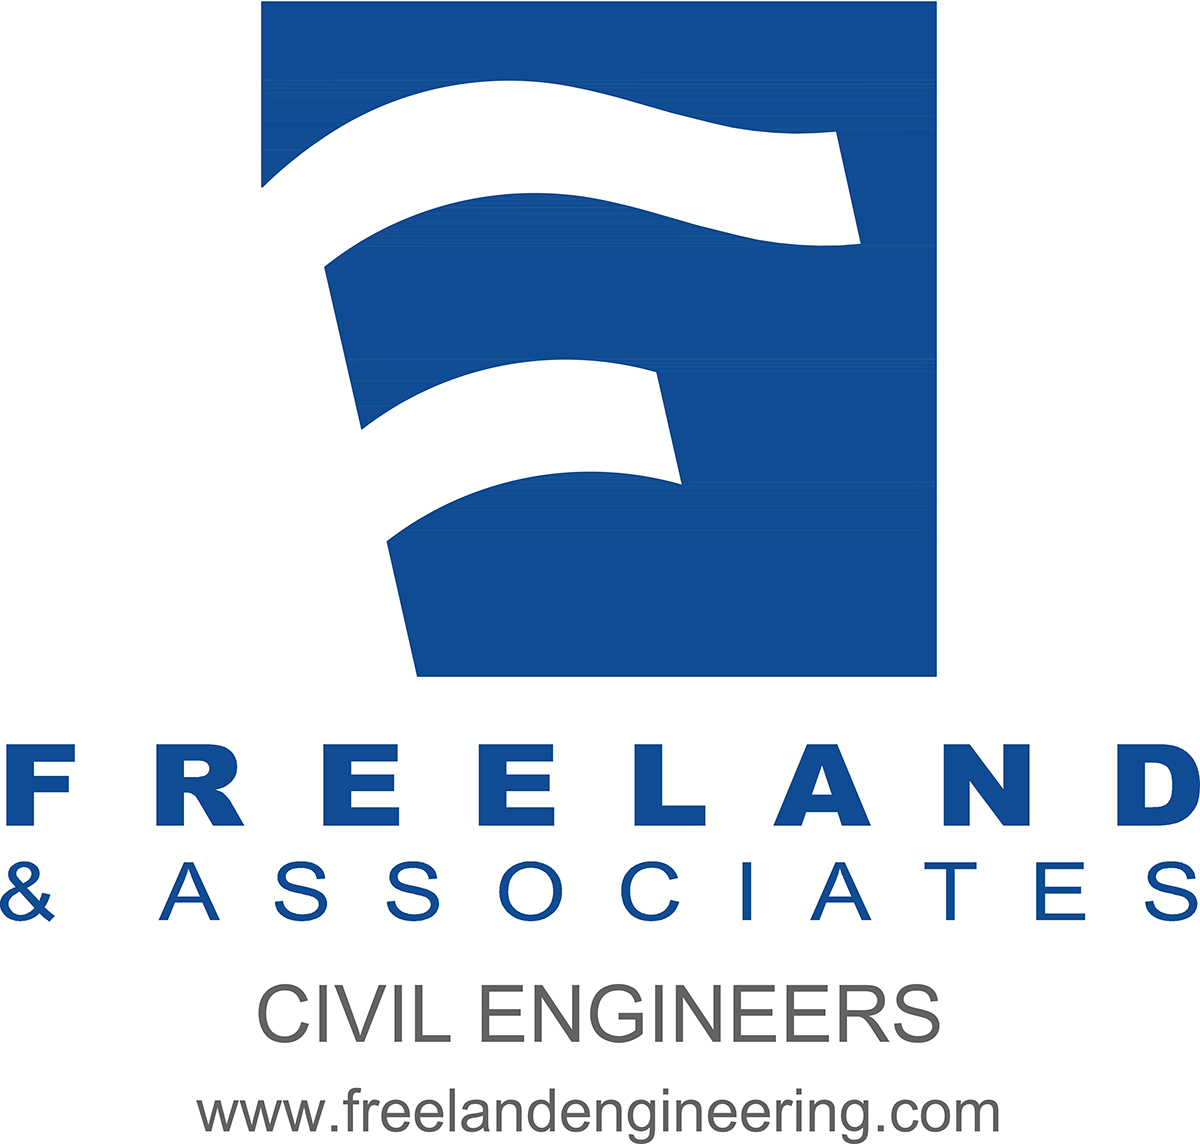 blue and black text on white background, with flag-like "F" logo: Freeland & Associates Civil Engineers; www.freelandengineering.com